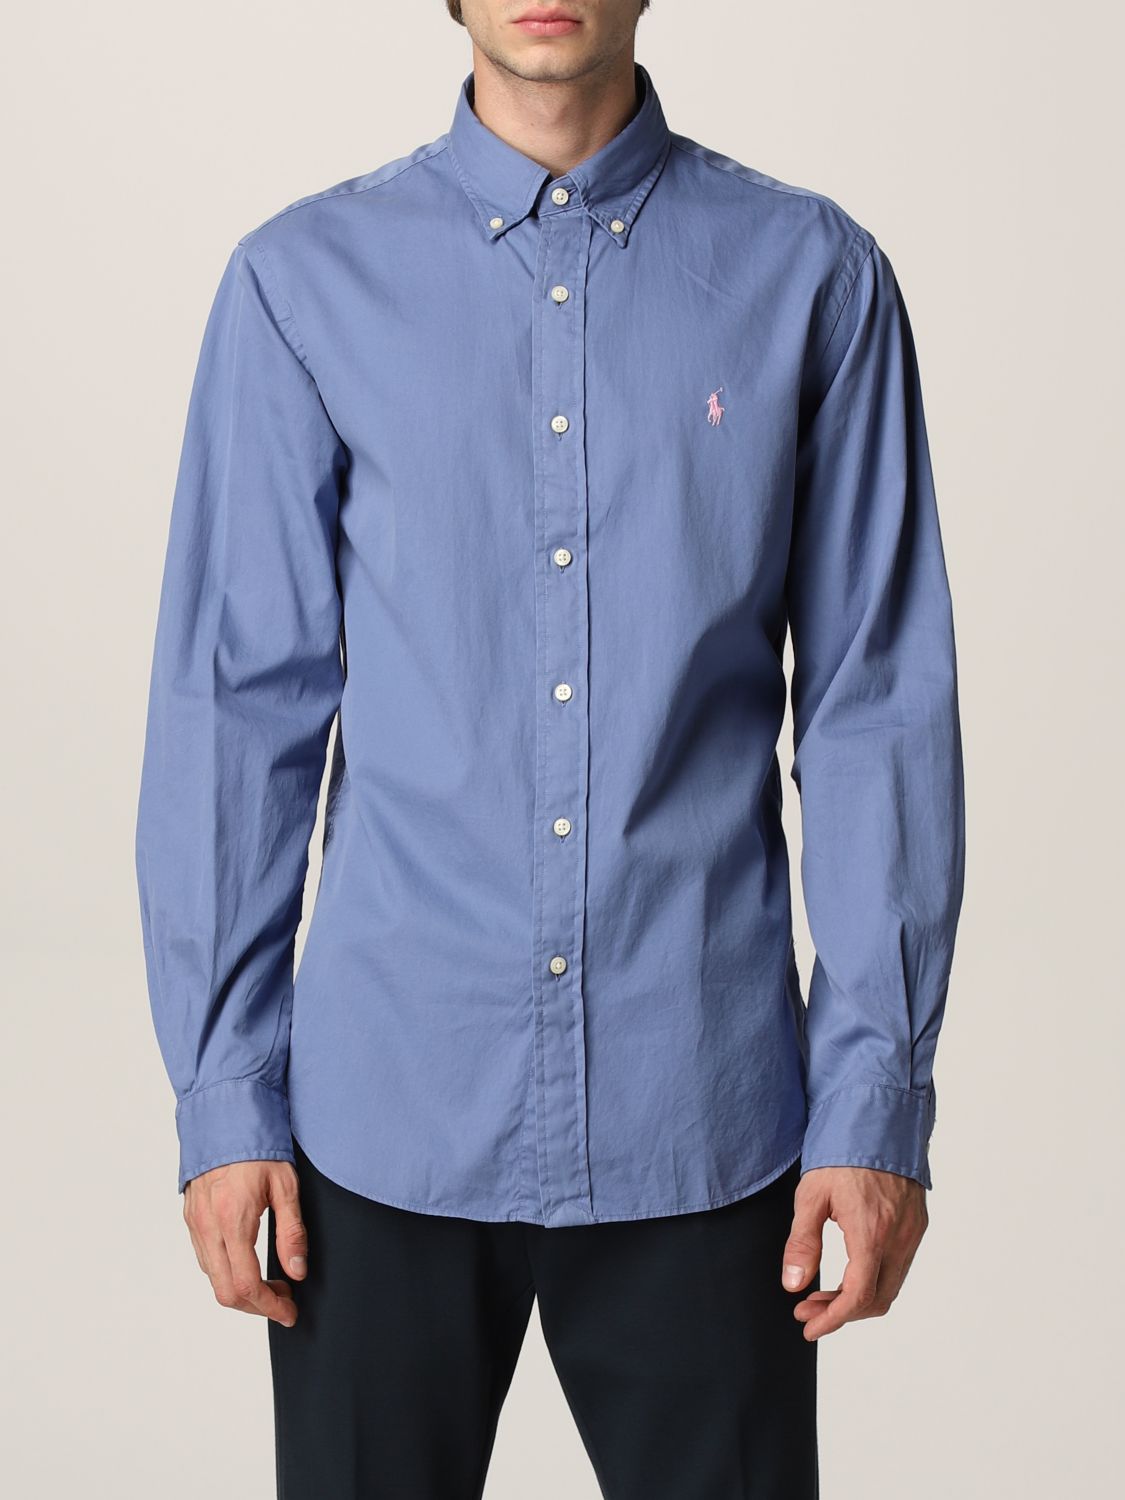 POLO RALPH LAUREN: cotton shirt - Blue | Polo Lauren shirt online on GIGLIO.COM